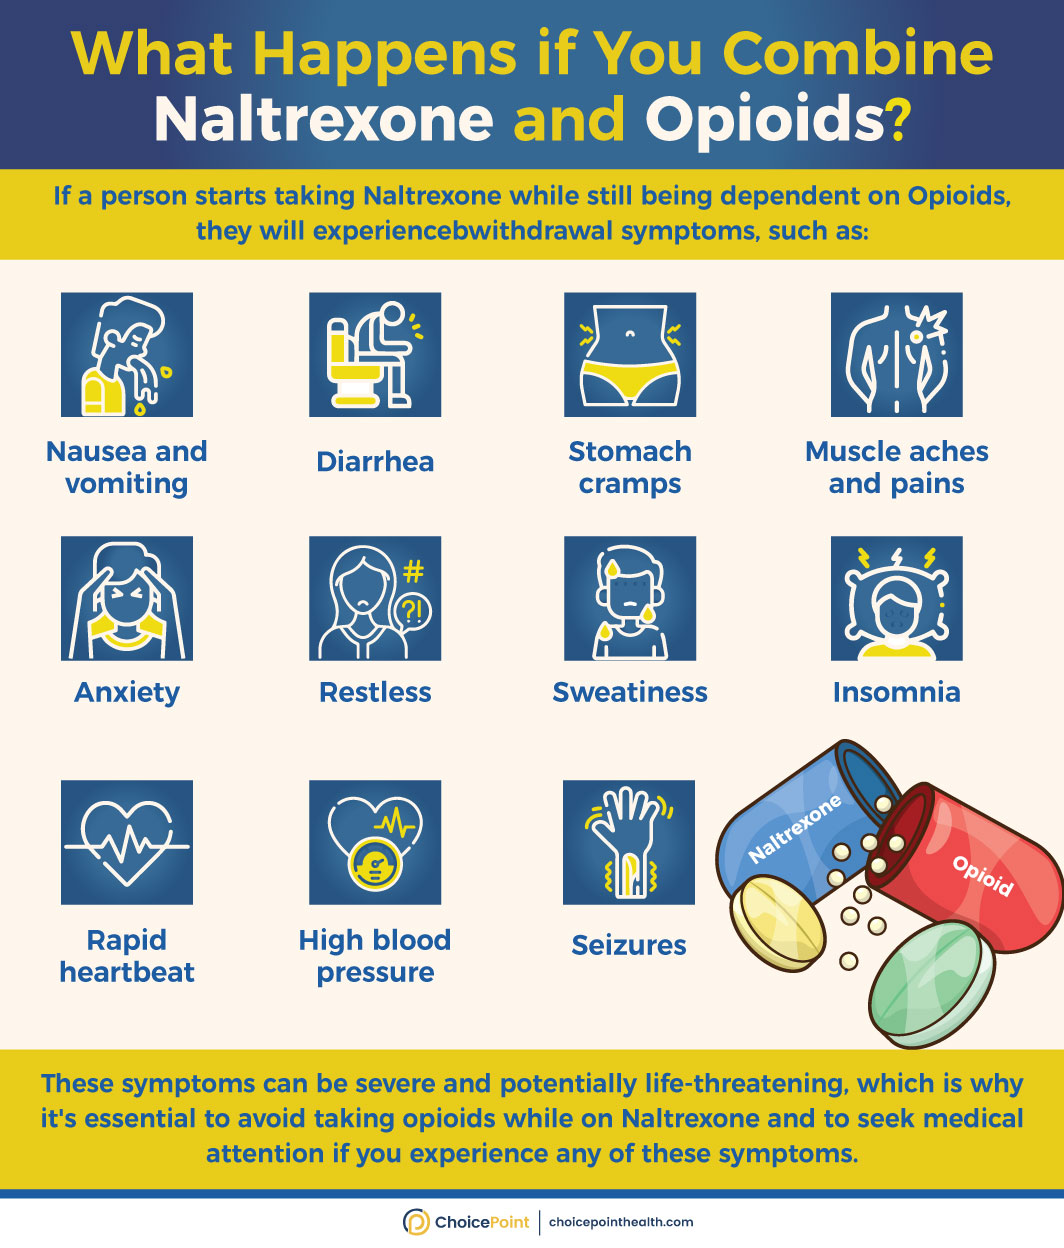 Does Naltrexone Reduce Opioid Tolerance?